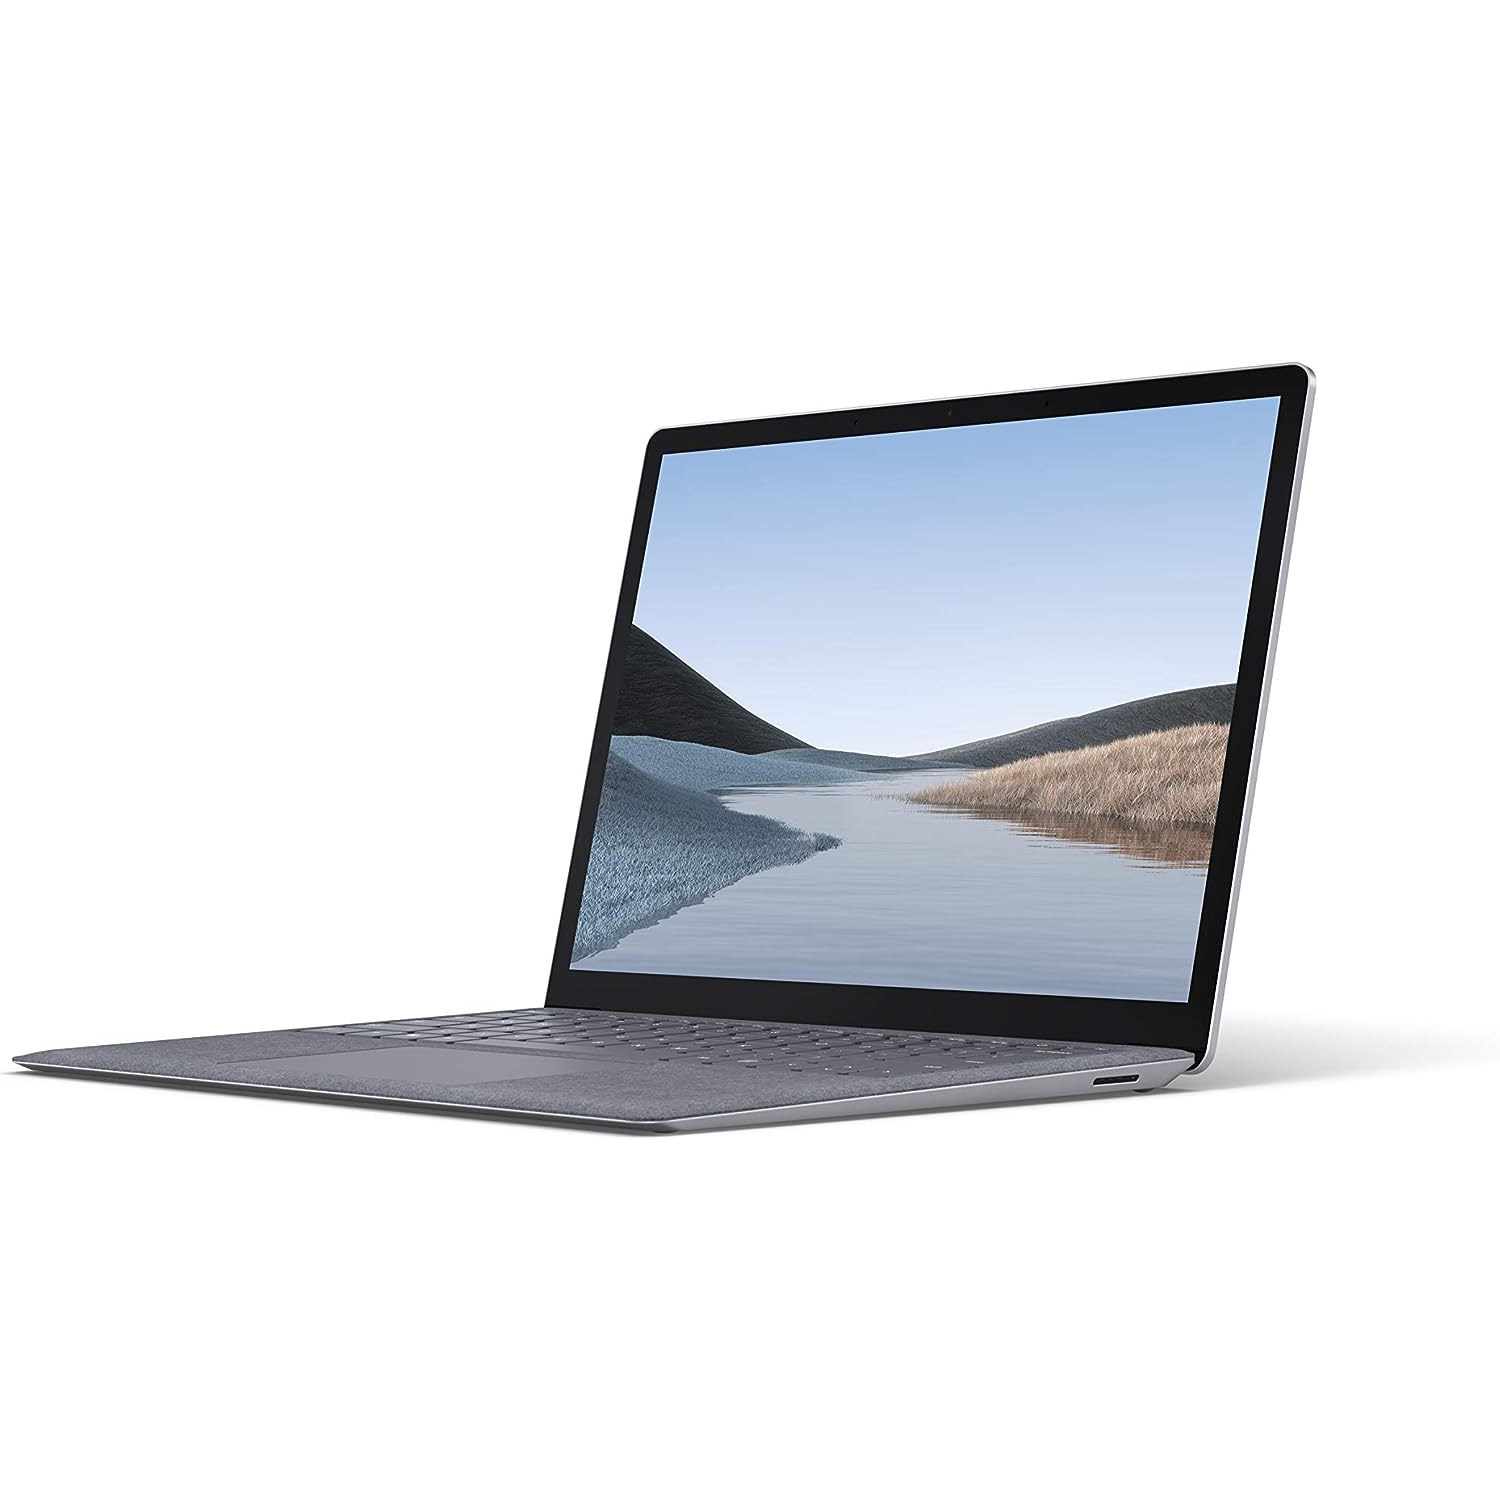 Refurbished (Excellent) - Microsoft Surface Laptop 3 QXX-00001 13.5" Touchscreen Notebook Intel i7-1065G7 16 GB LPDDR4 256 GB SSD Windows 10 Pro 64-Bit